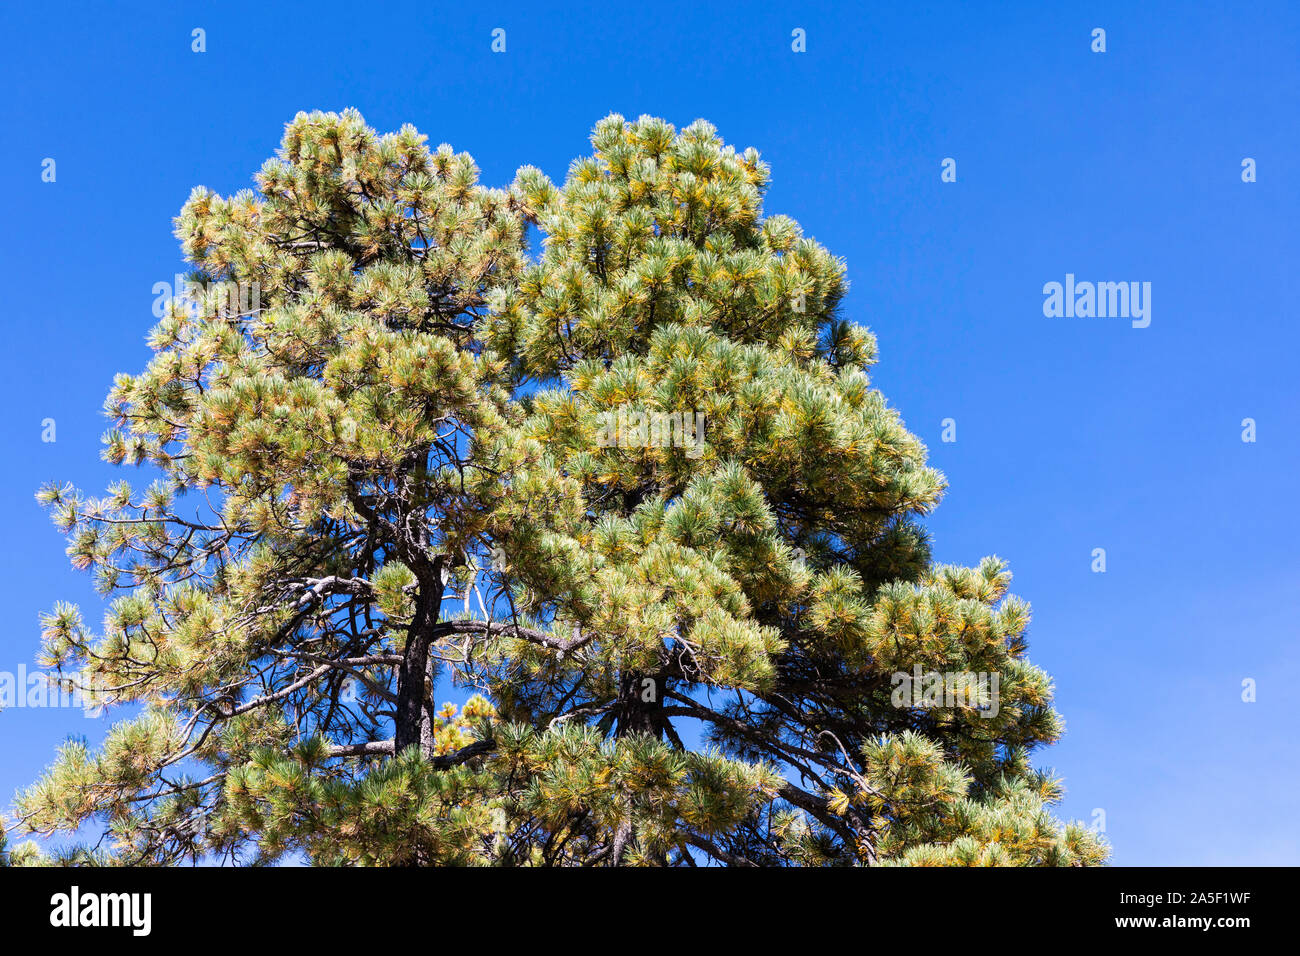 Pine trees against a stark blue sky Stock Photo